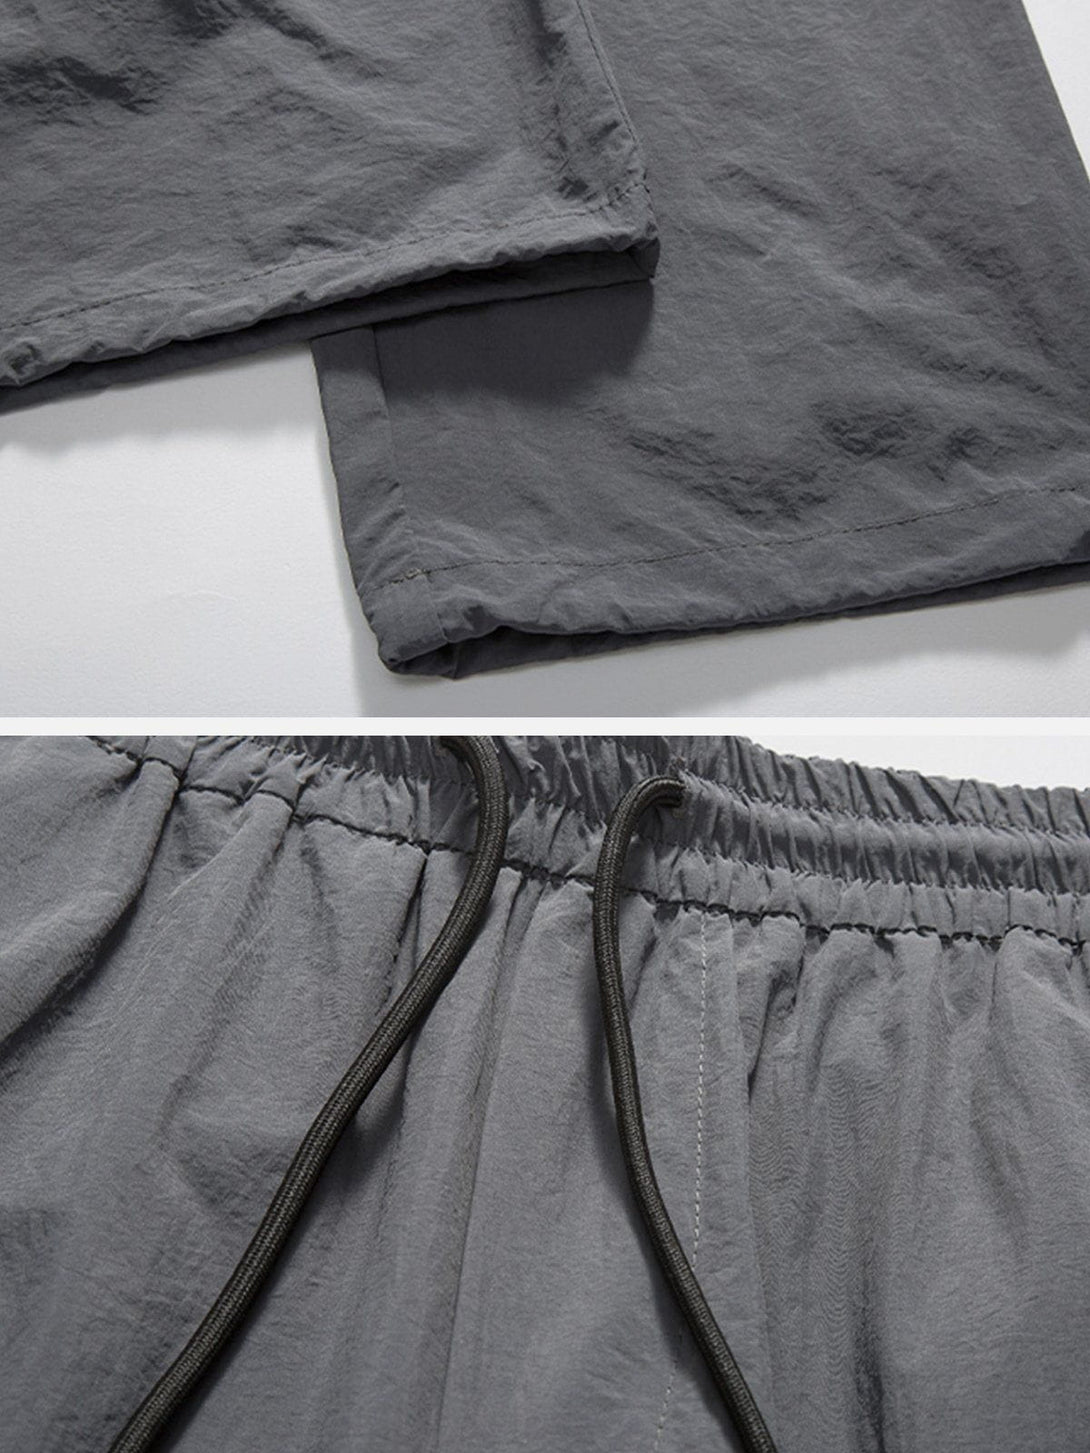 Levefly - Zip Multi-Pocket Cargo Pants - Streetwear Fashion - levefly.com